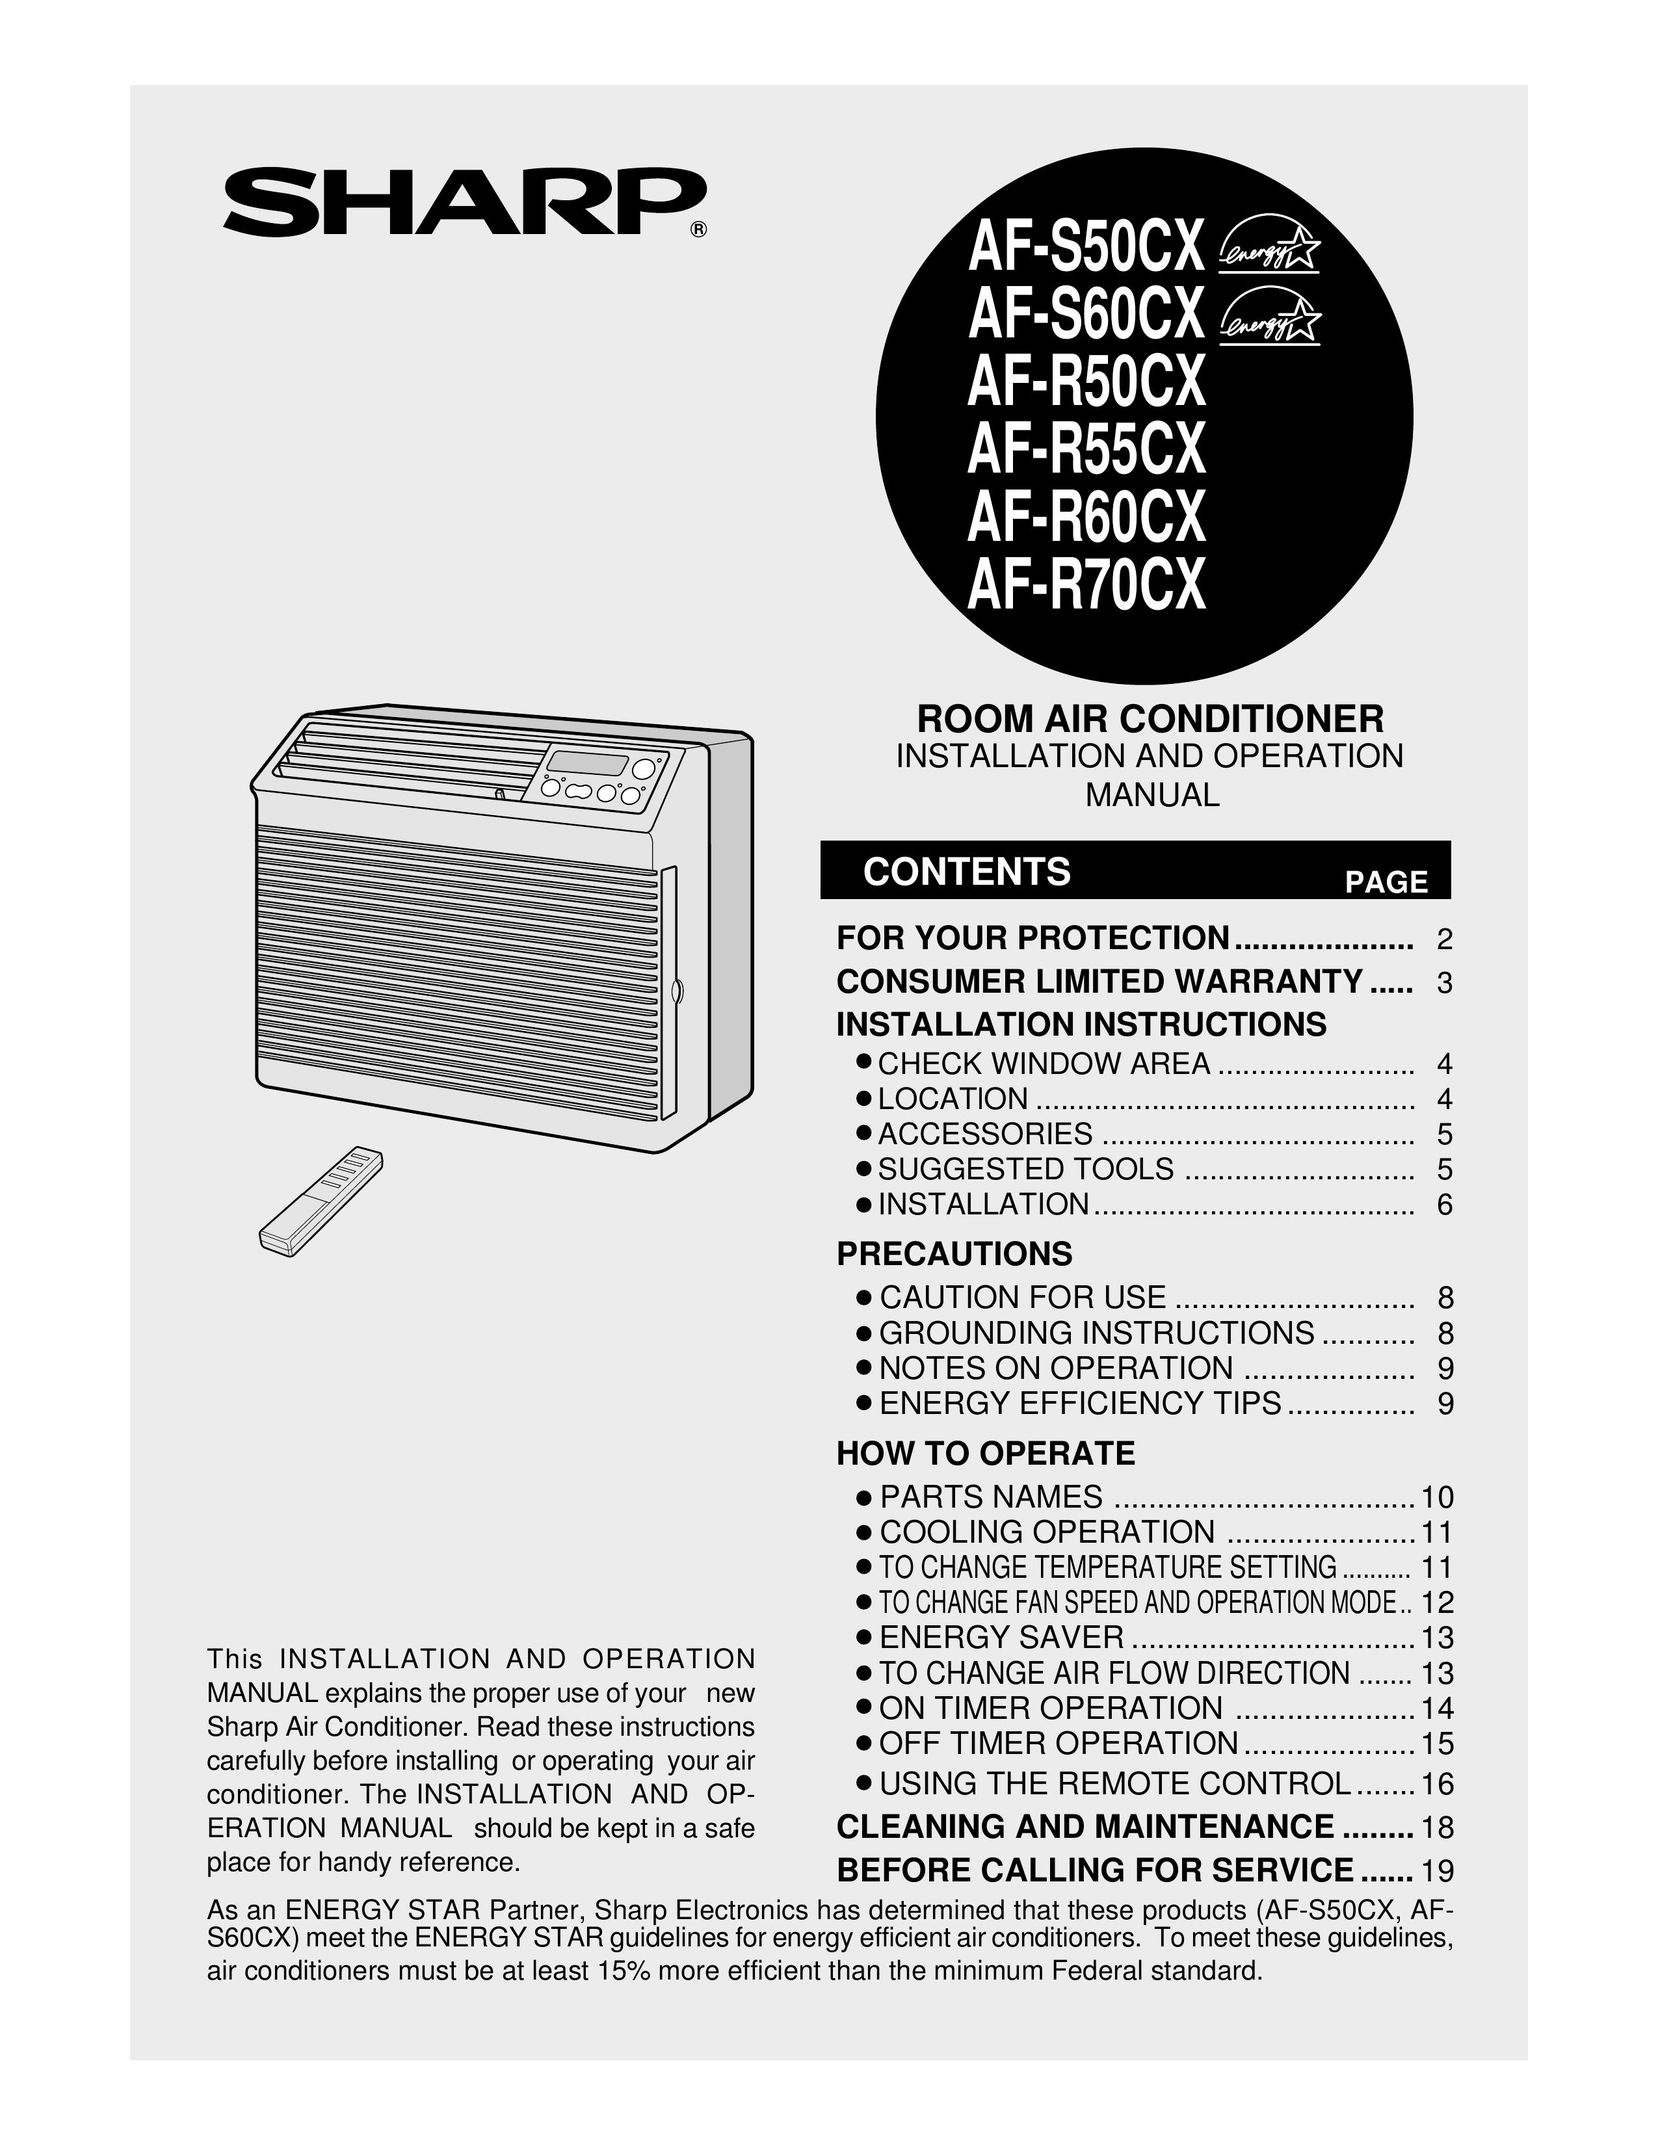 Sharp AF-R60CX Air Conditioner User Manual